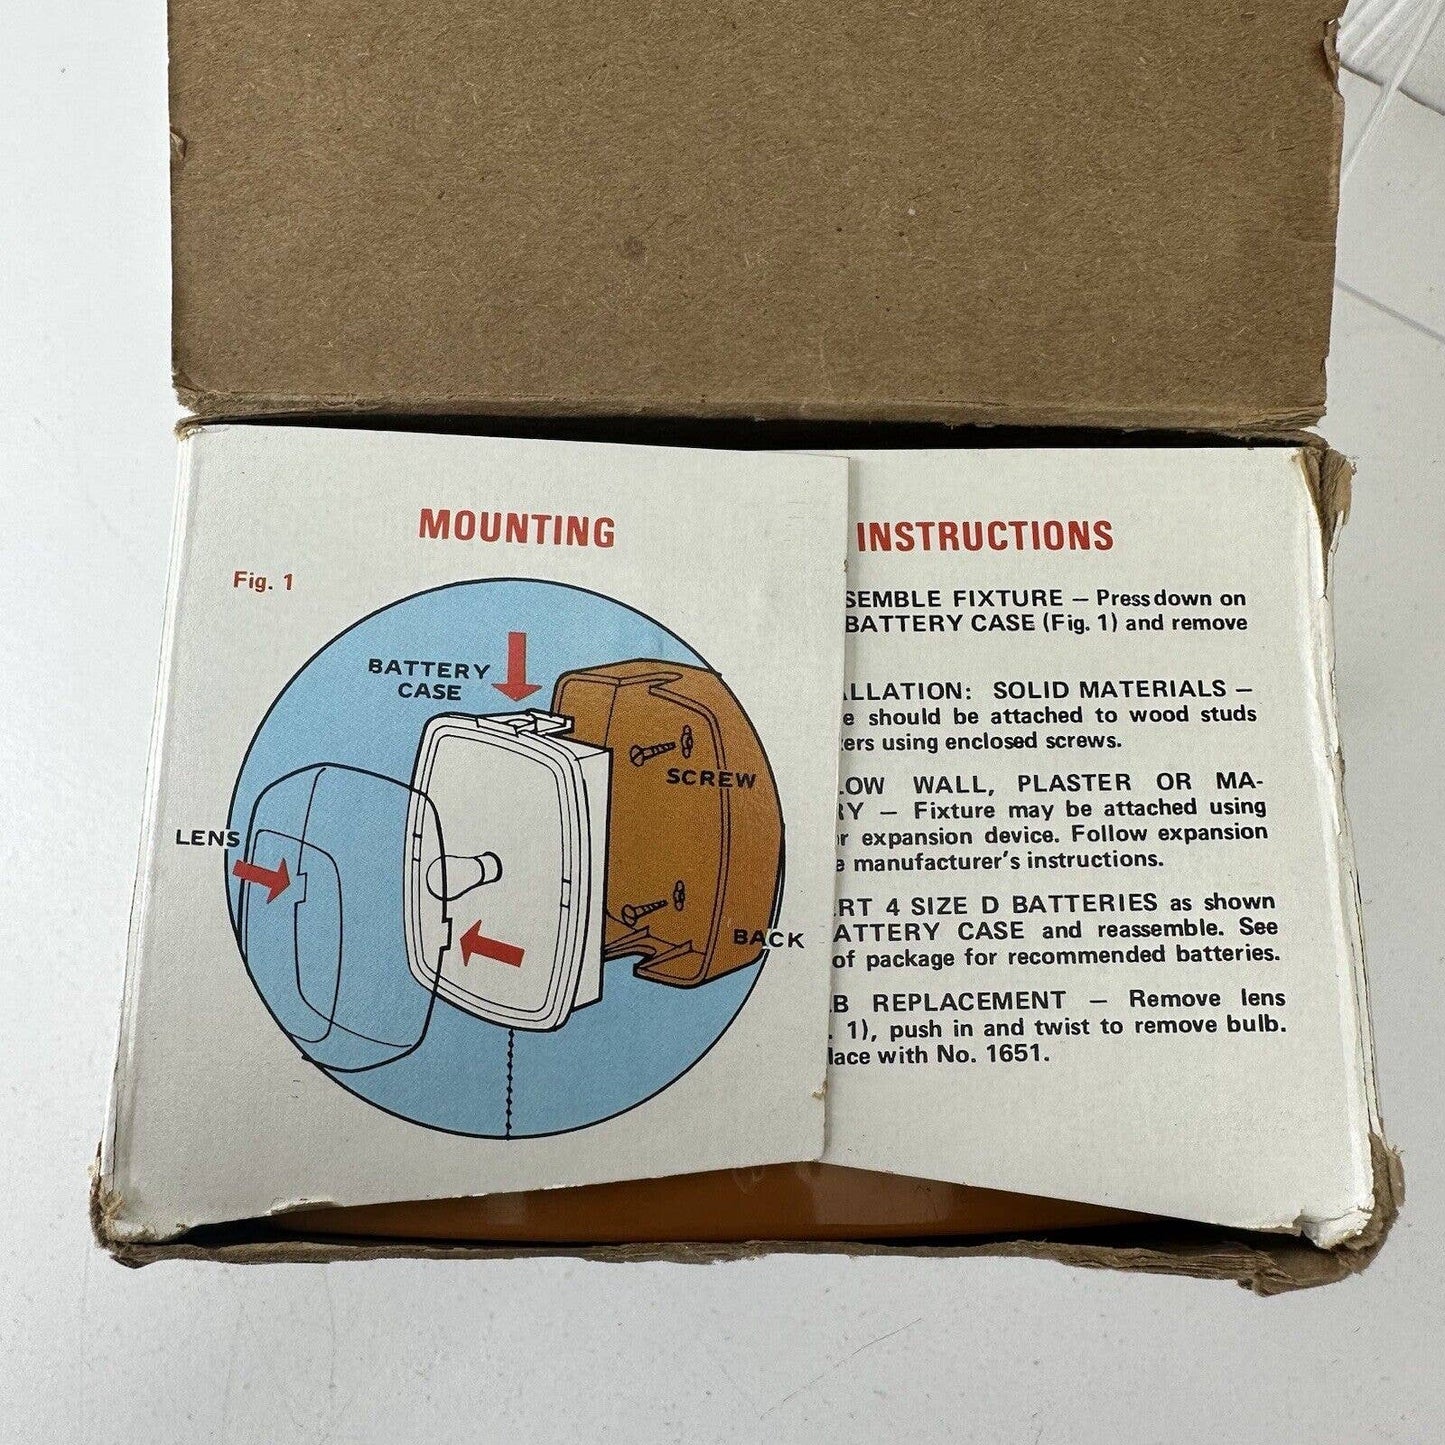 Ray-O-Vac Wireless Rust Orange Light Fixture Battery Powered #200 Vintage 1970s